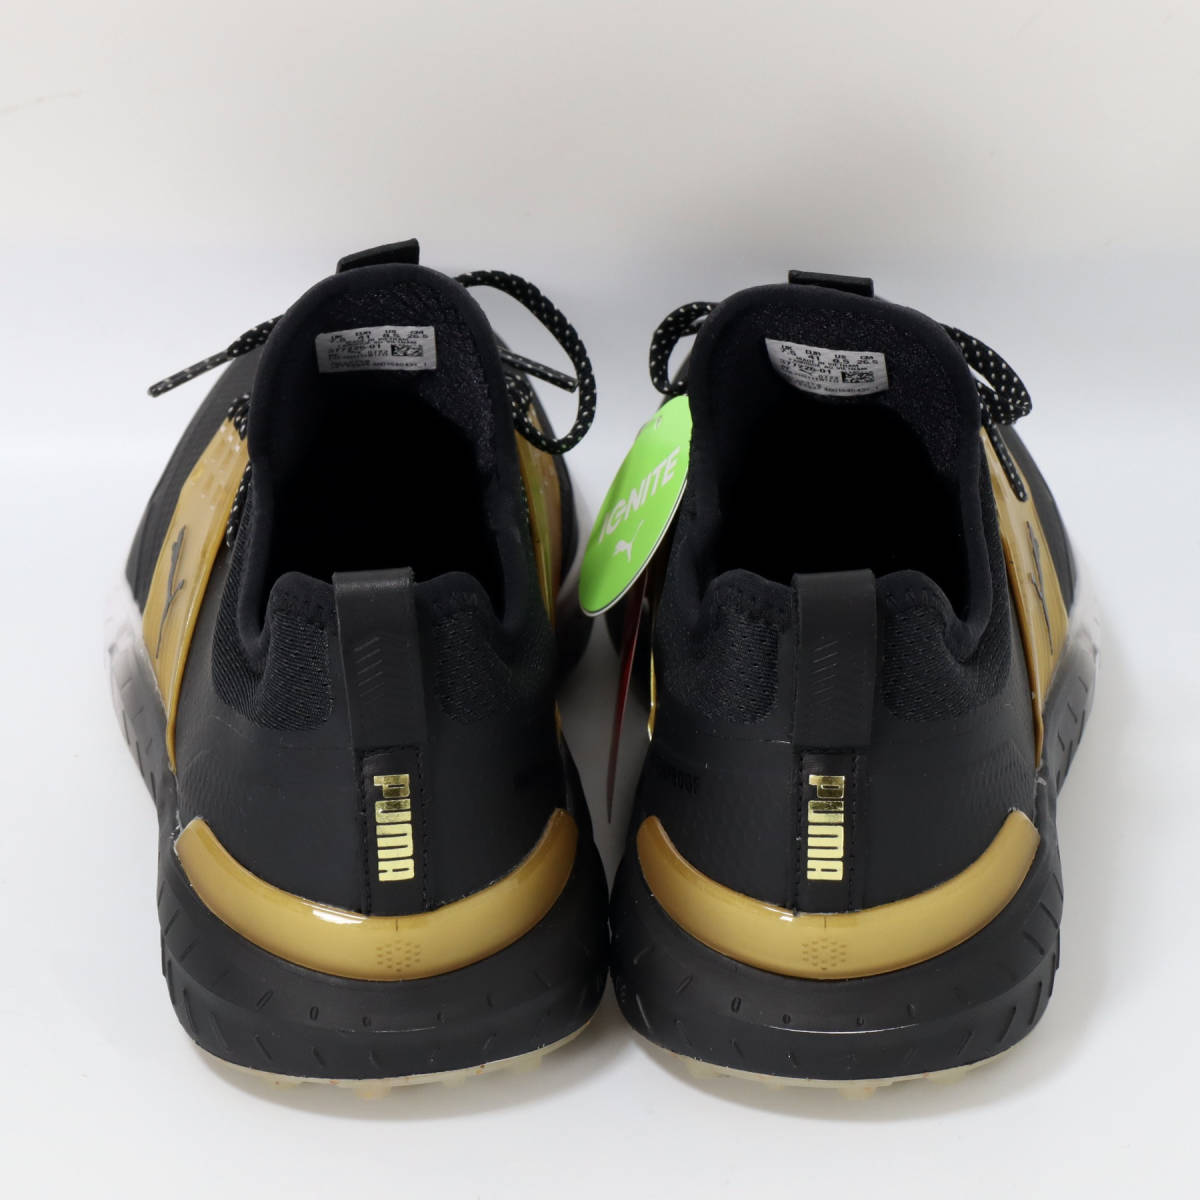 #[26.5cm] regular price 22,000 jpy Puma Golf ig Night articulated Gold spike shoes #